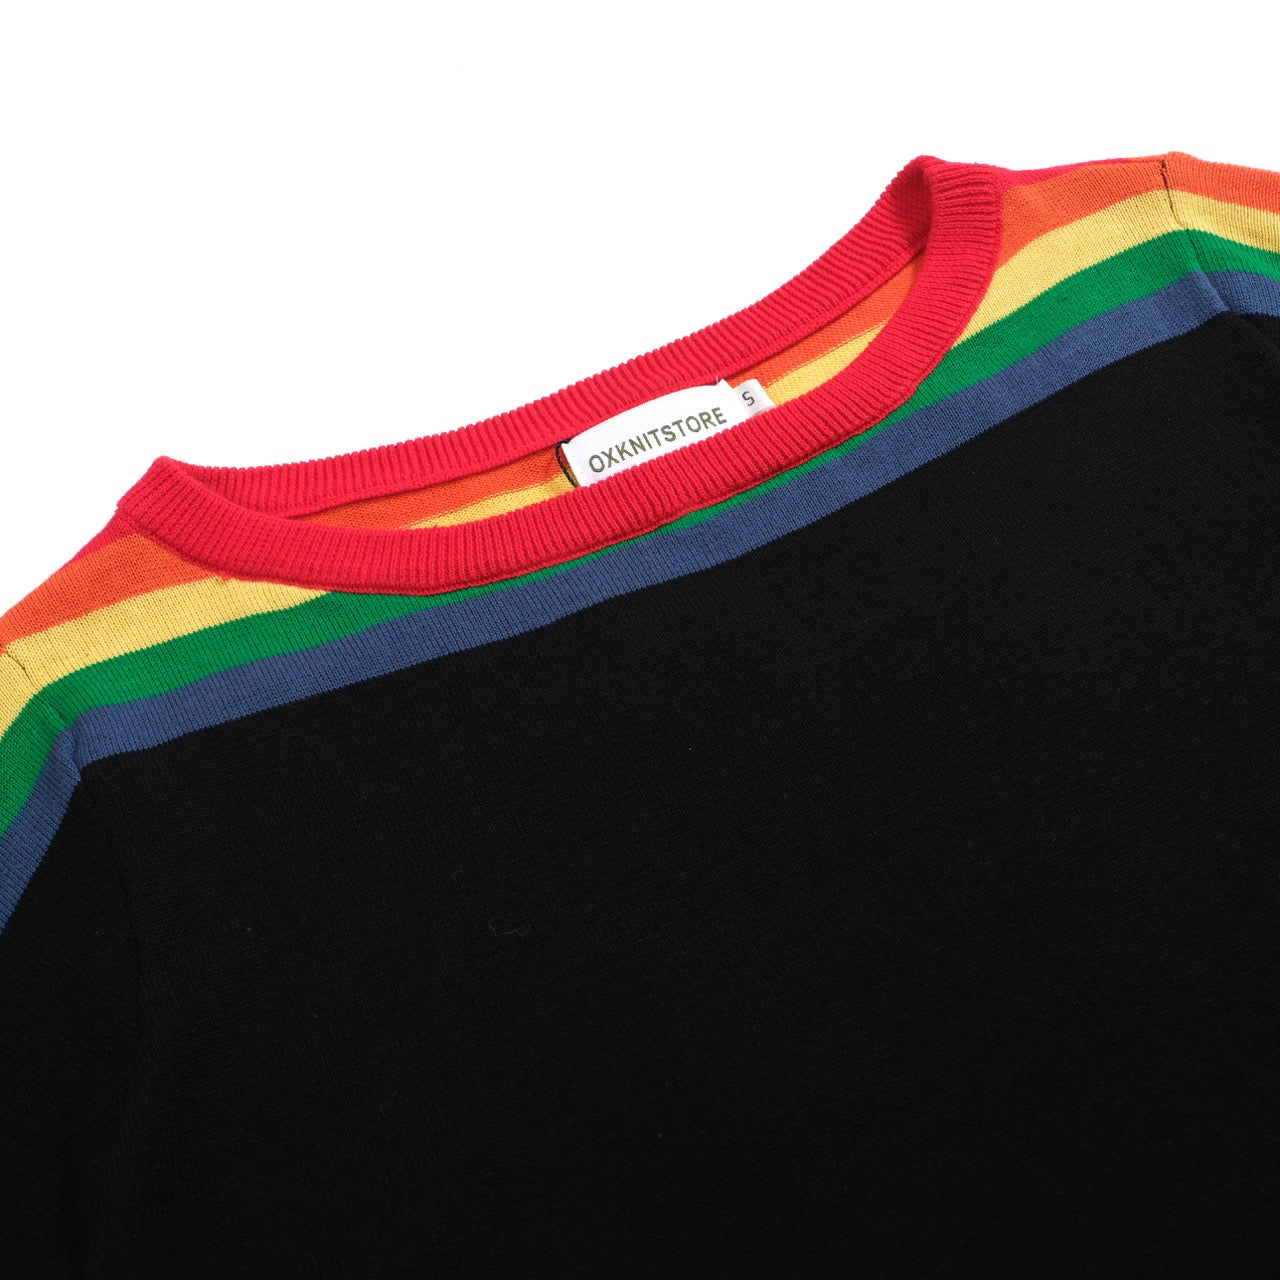 Women's Rainbow Elbow-length Sleeve Knitted T-Shirt